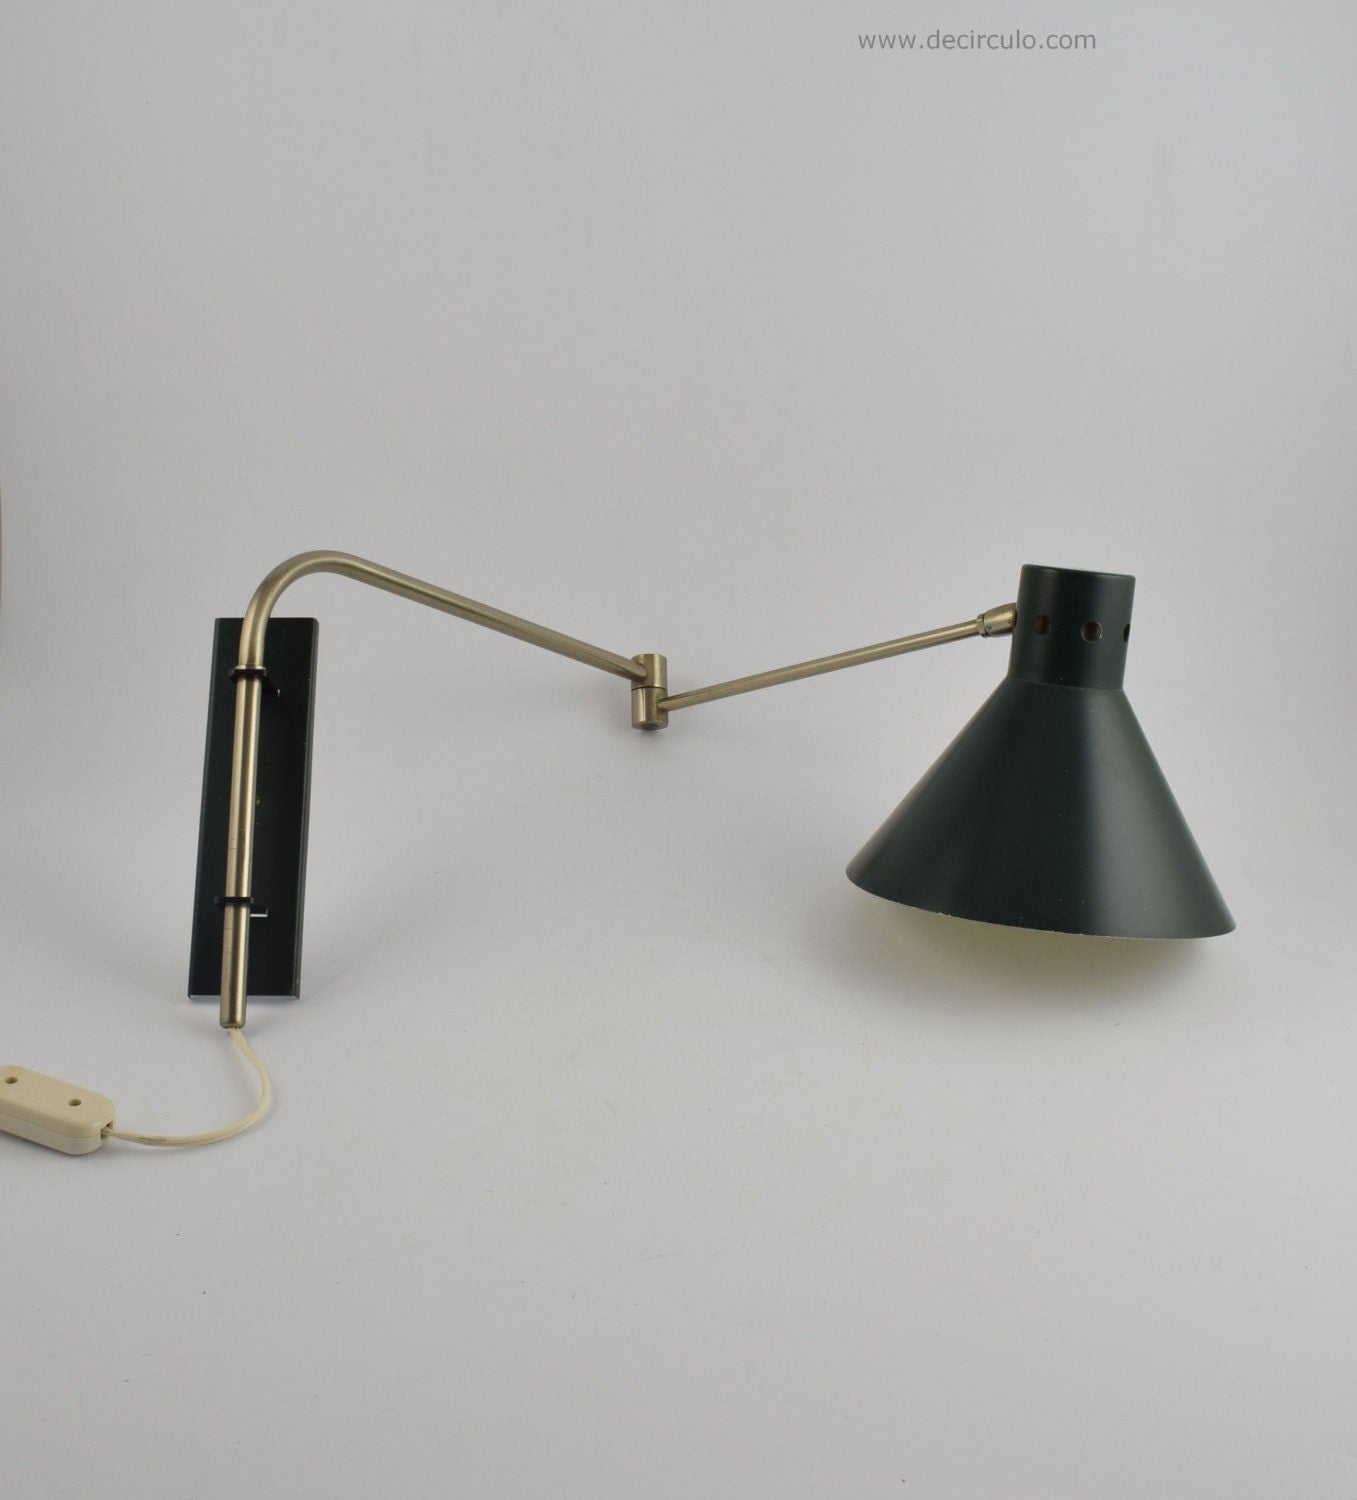 Swing wall light artimeta, dark green swing wall lamp from dutch design firm artimeta